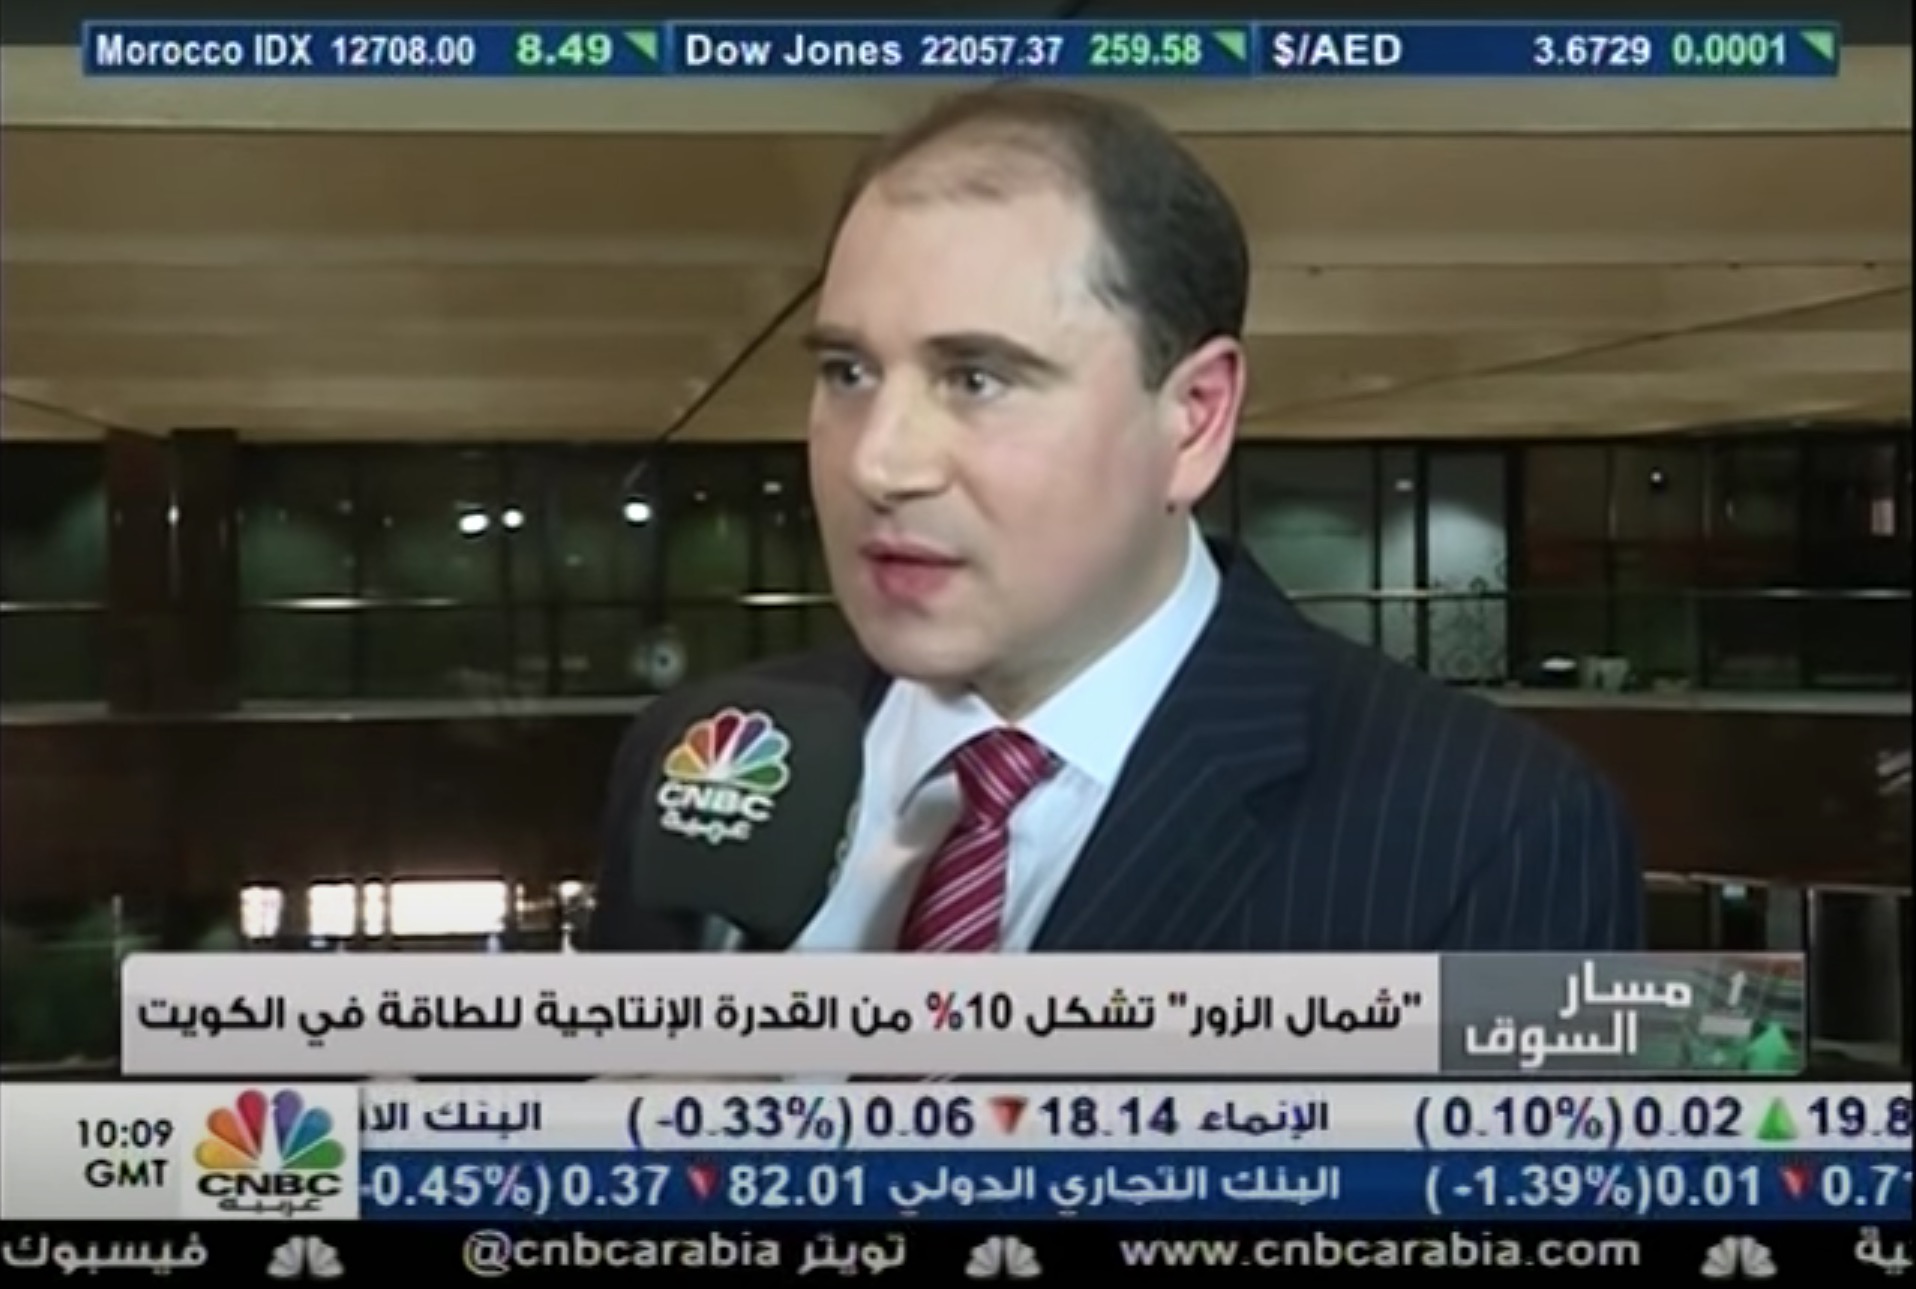 NBK Capital Executive Director Mr. Rachad Challah’s interview on CNBC Arabia TV